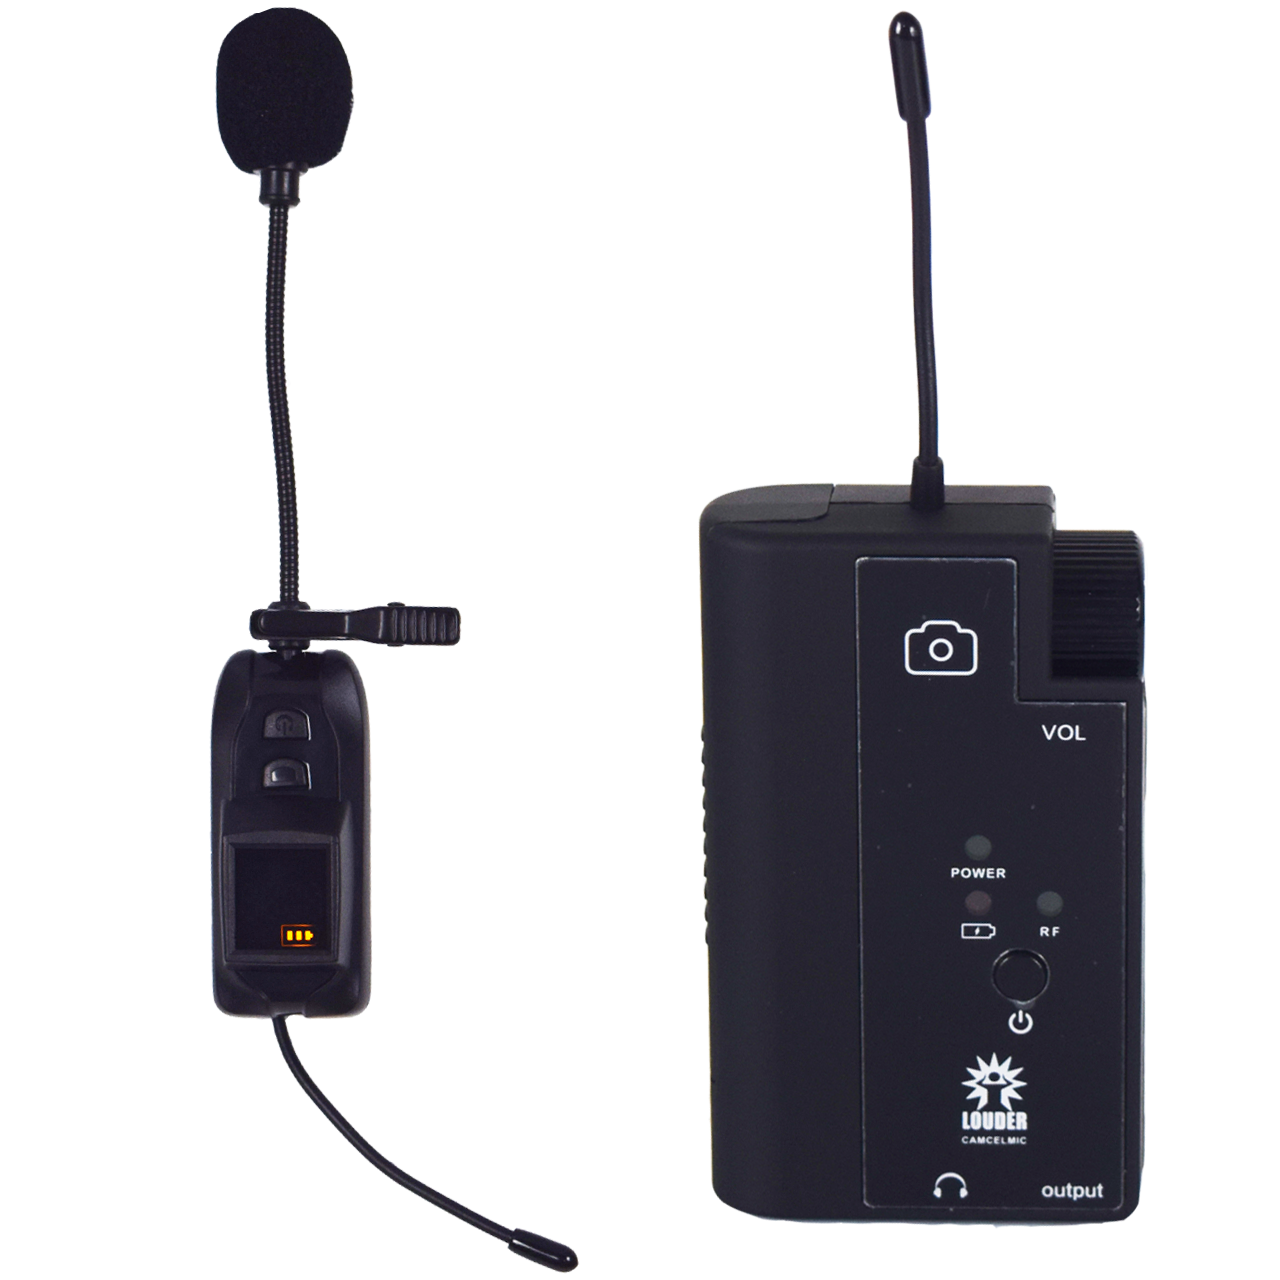  Micrófono de cámara Grabación de estudio Ligero y conveniente  Micrófono de reducción de sonido NCR con puerto de carga micro USB para  teléfono móvil Cámaras DSLR Transmisión en vivo Vlog 